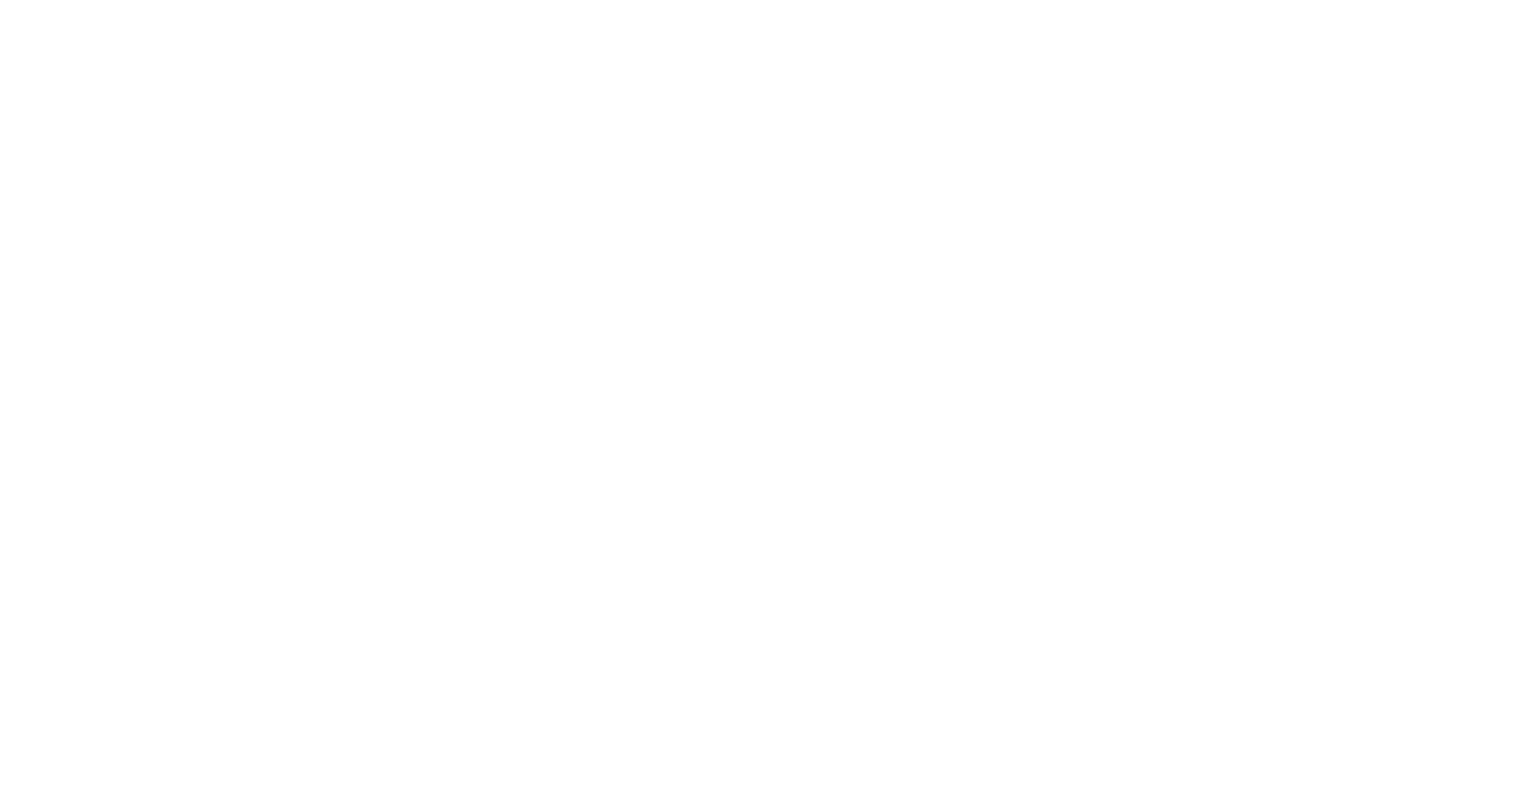 Meiko Electronics logo for dark backgrounds (transparent PNG)